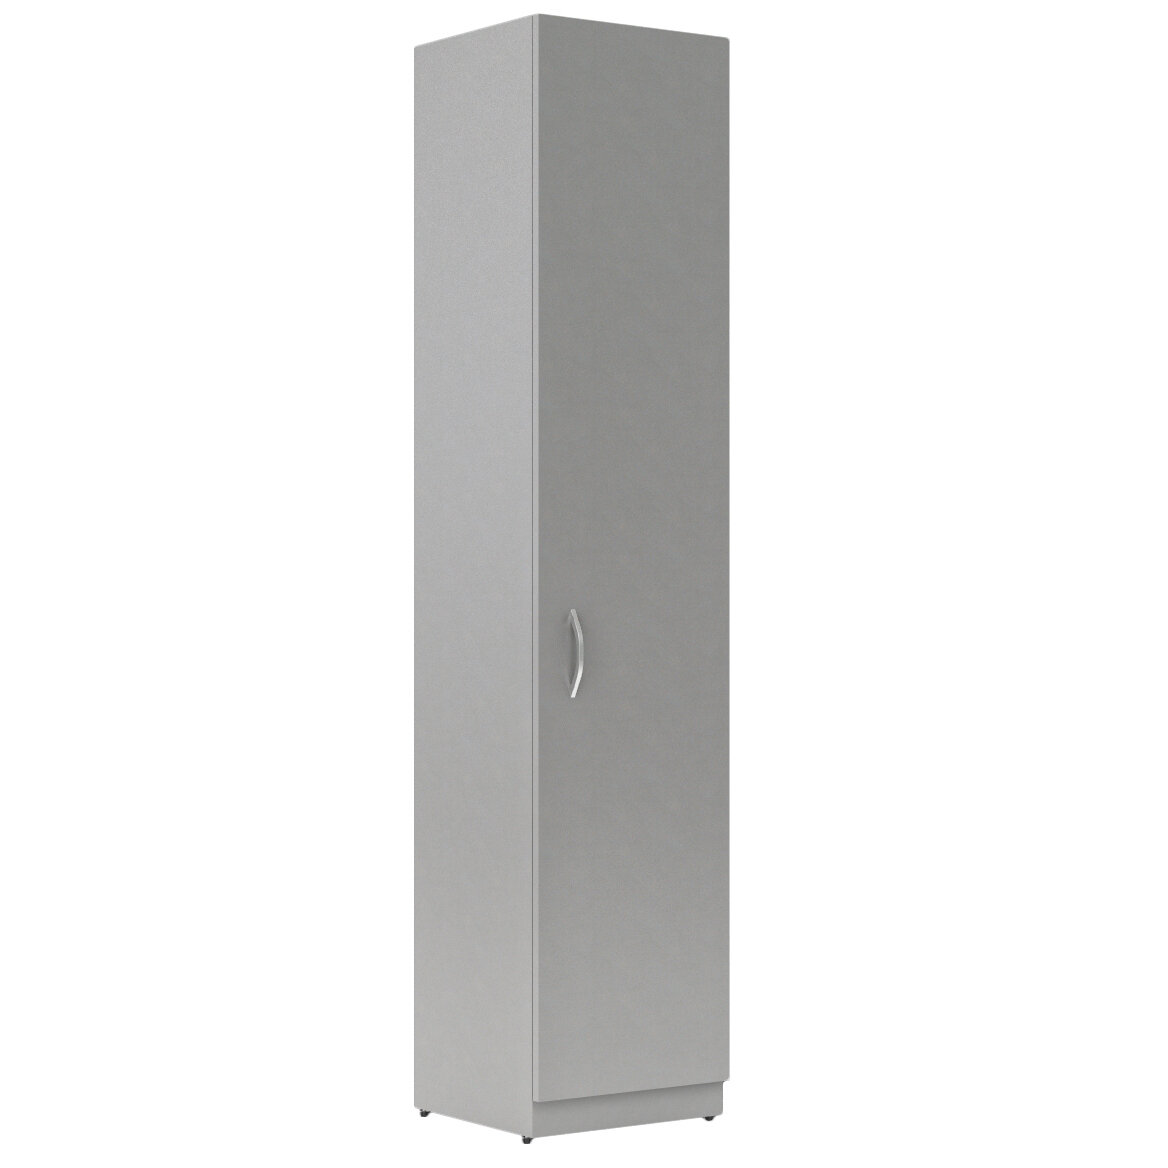 Шкаф пенал напольный SKYLAND SIMPLE SR-5U.1(R), узкий шкаф распашной, правый, серый, 38.6х37.5х181.5 см